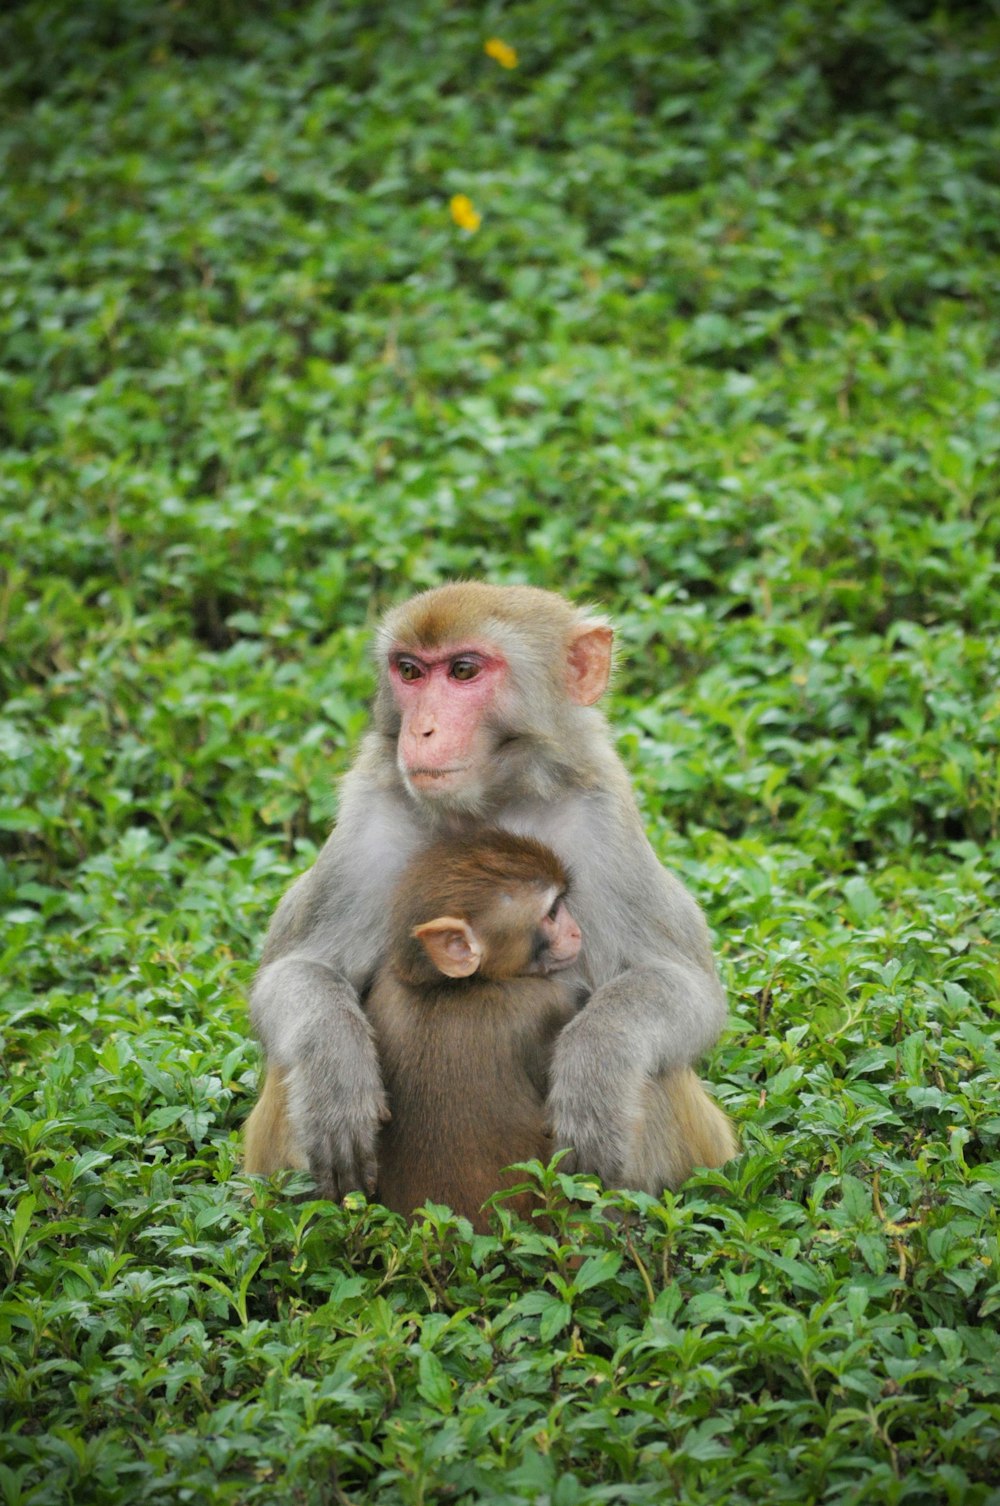 two grey monkey sitting on grass